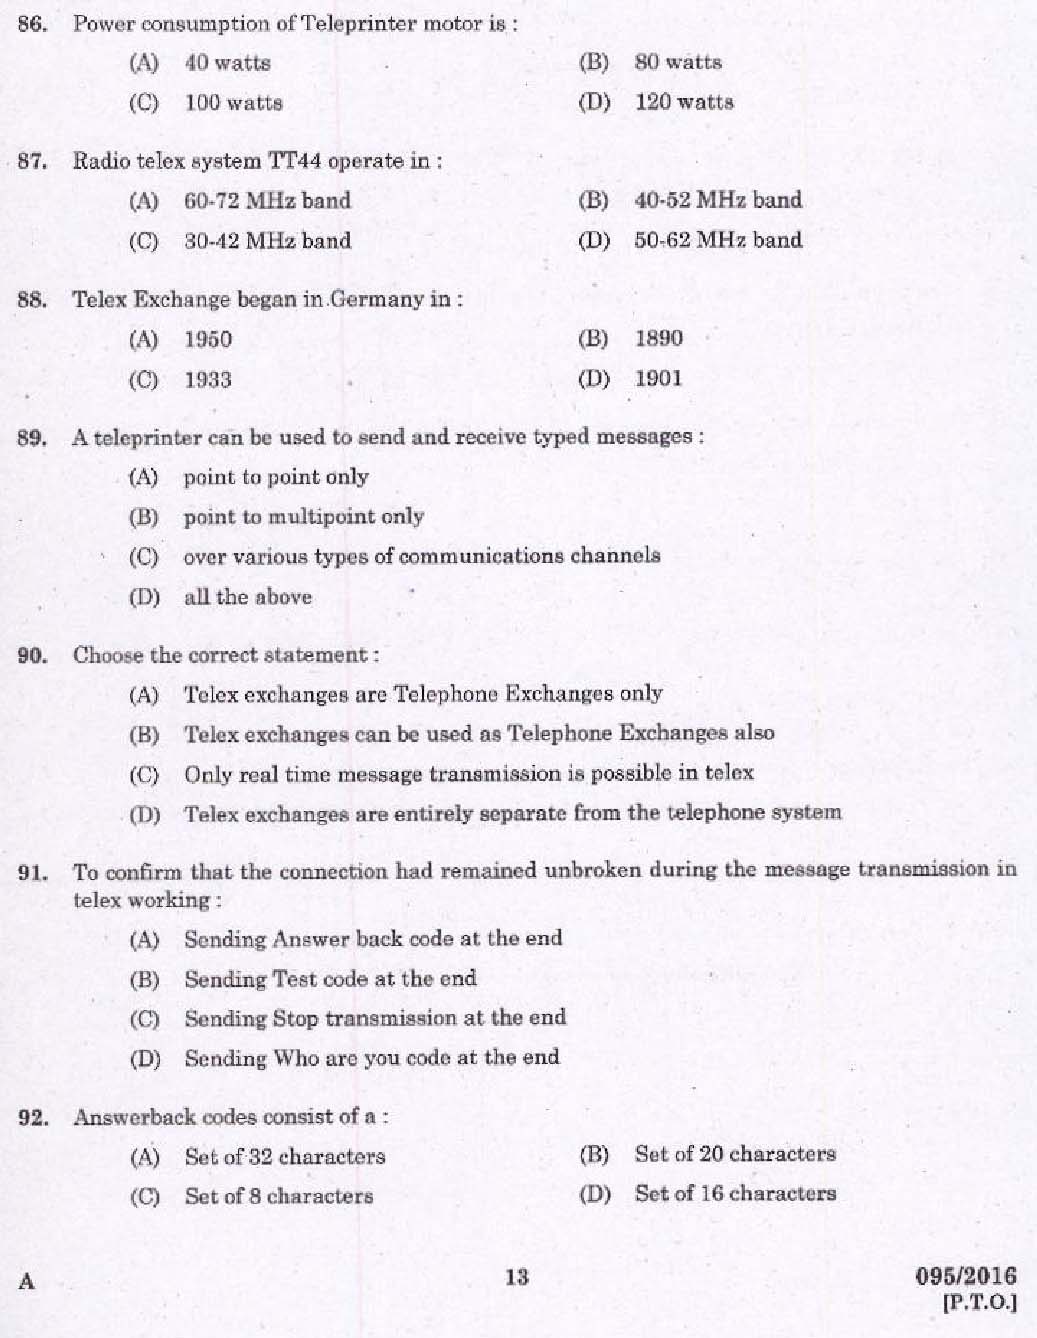 Kerala PSC Telephone Operator Exam Question Code 0952016 11